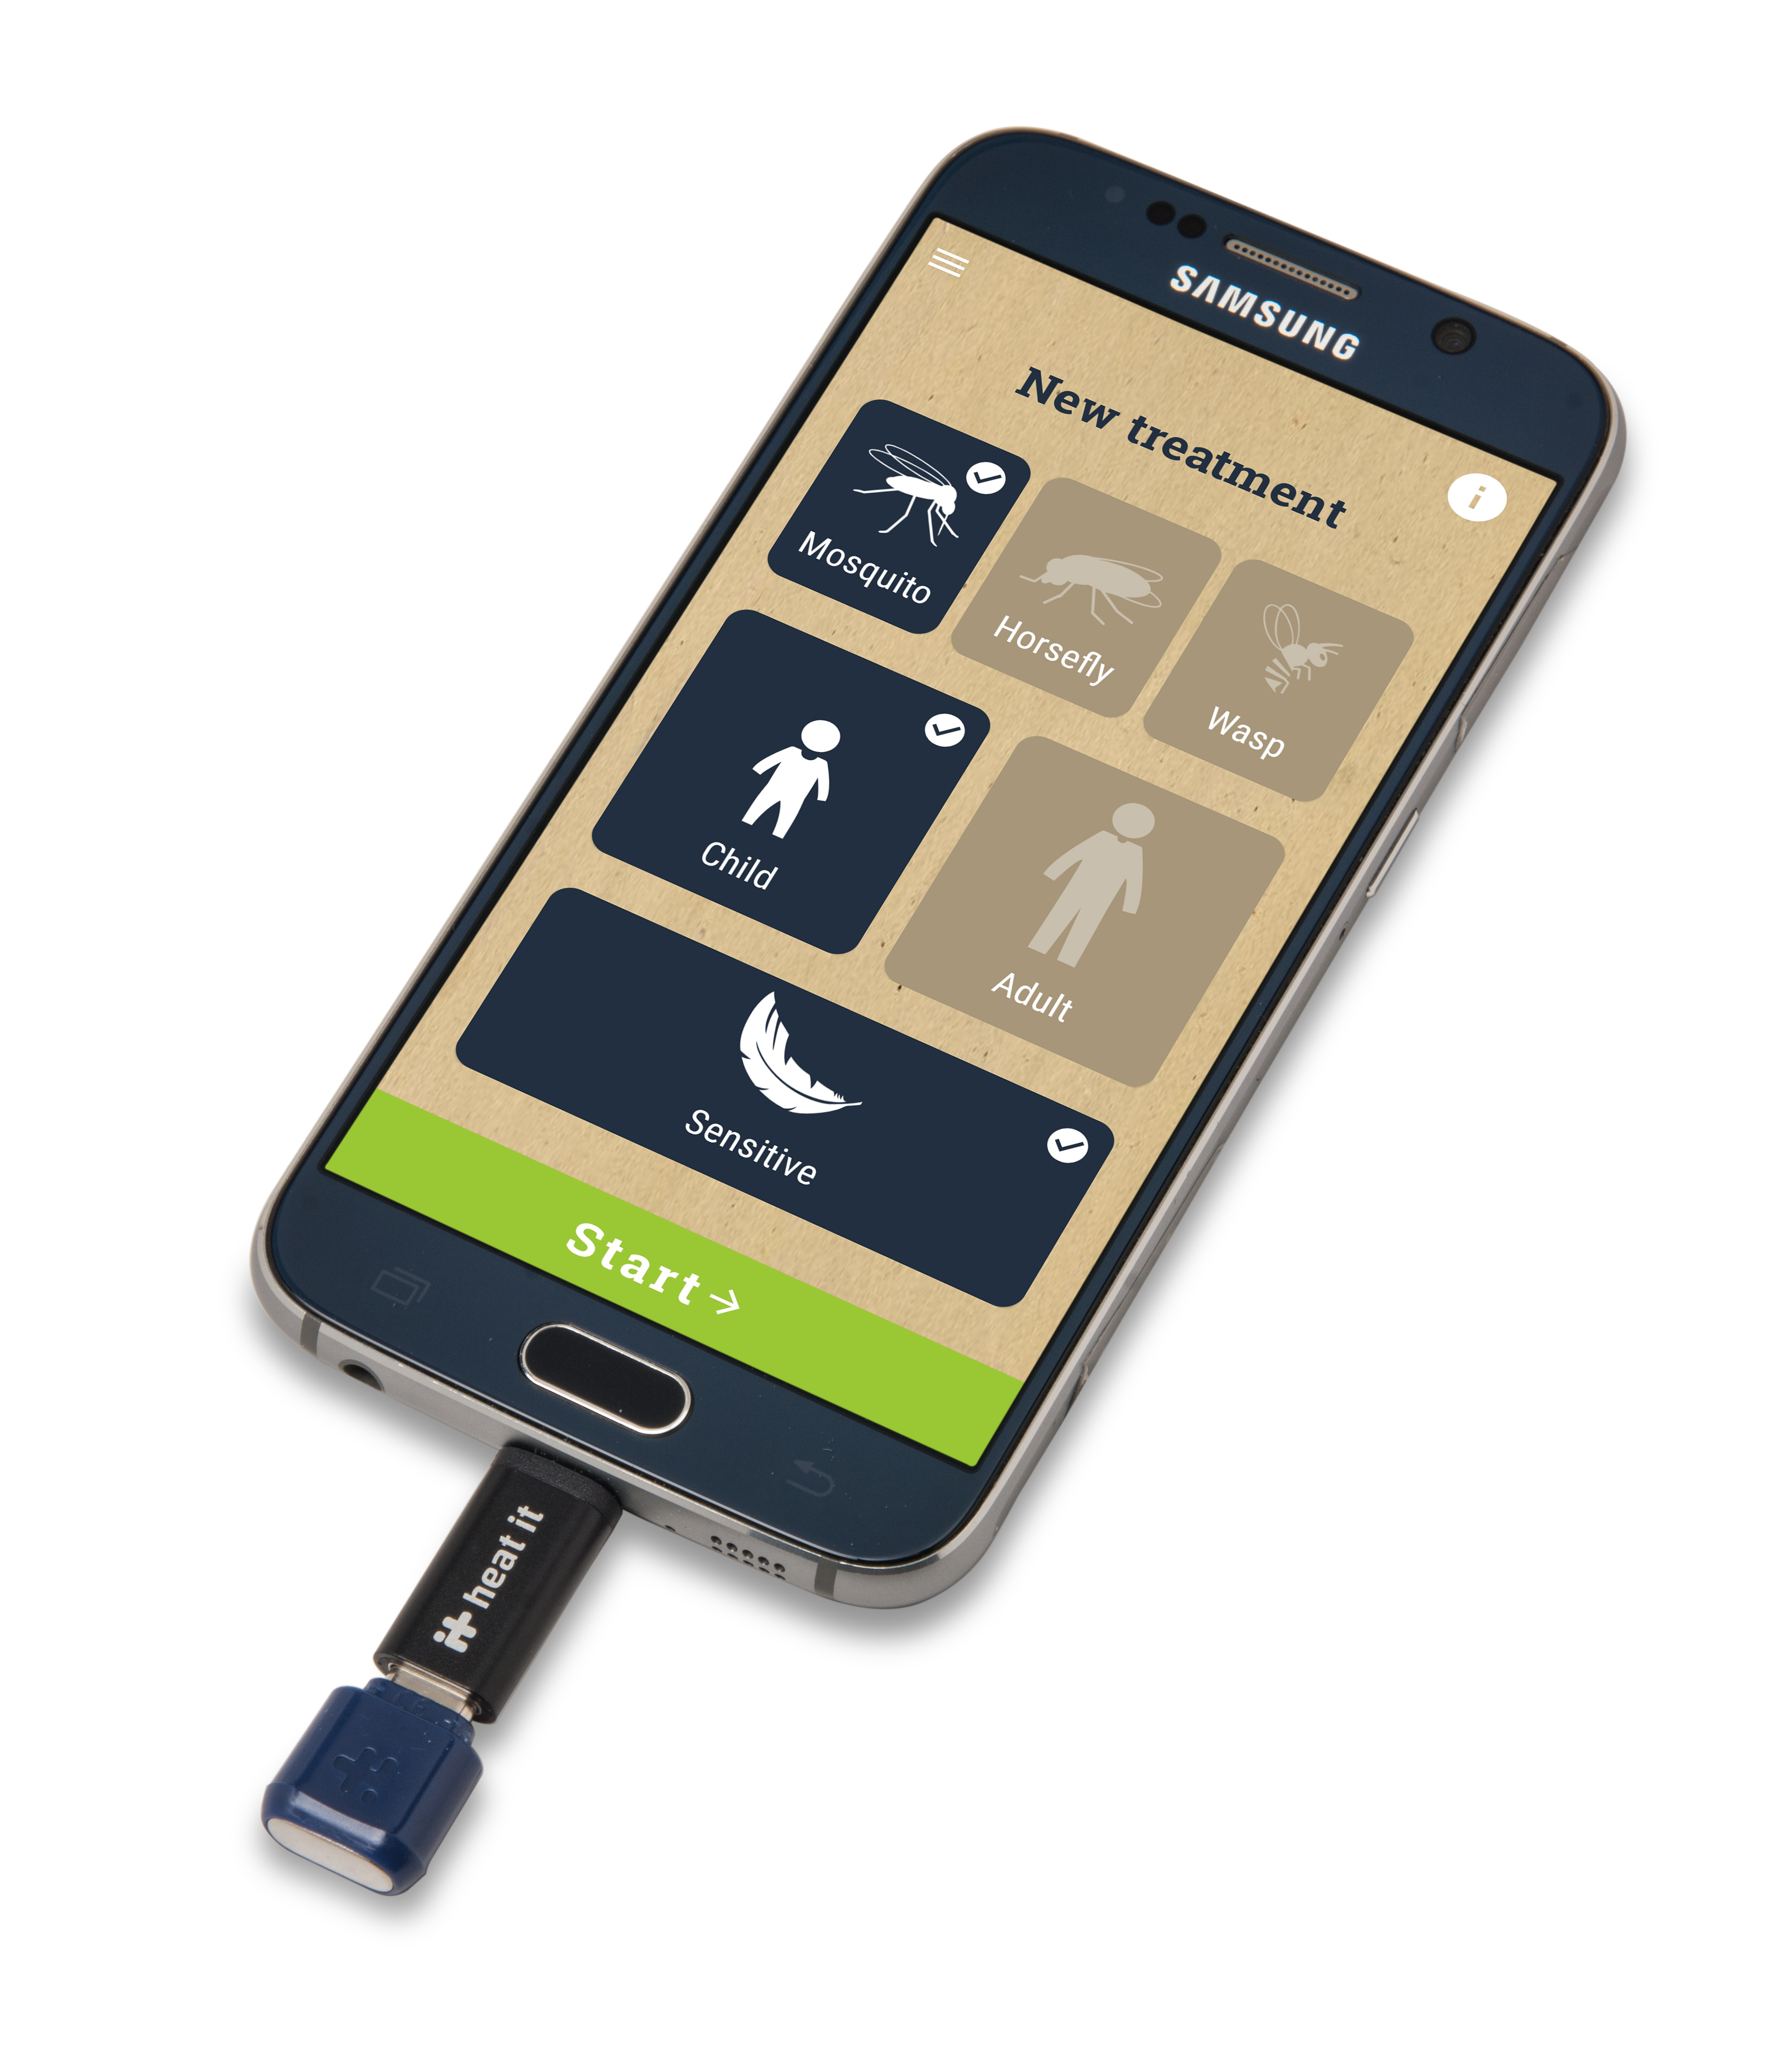 553513 Silber/Schwarz C Micro HEAT Typ USB IT Adapter Android USB auf